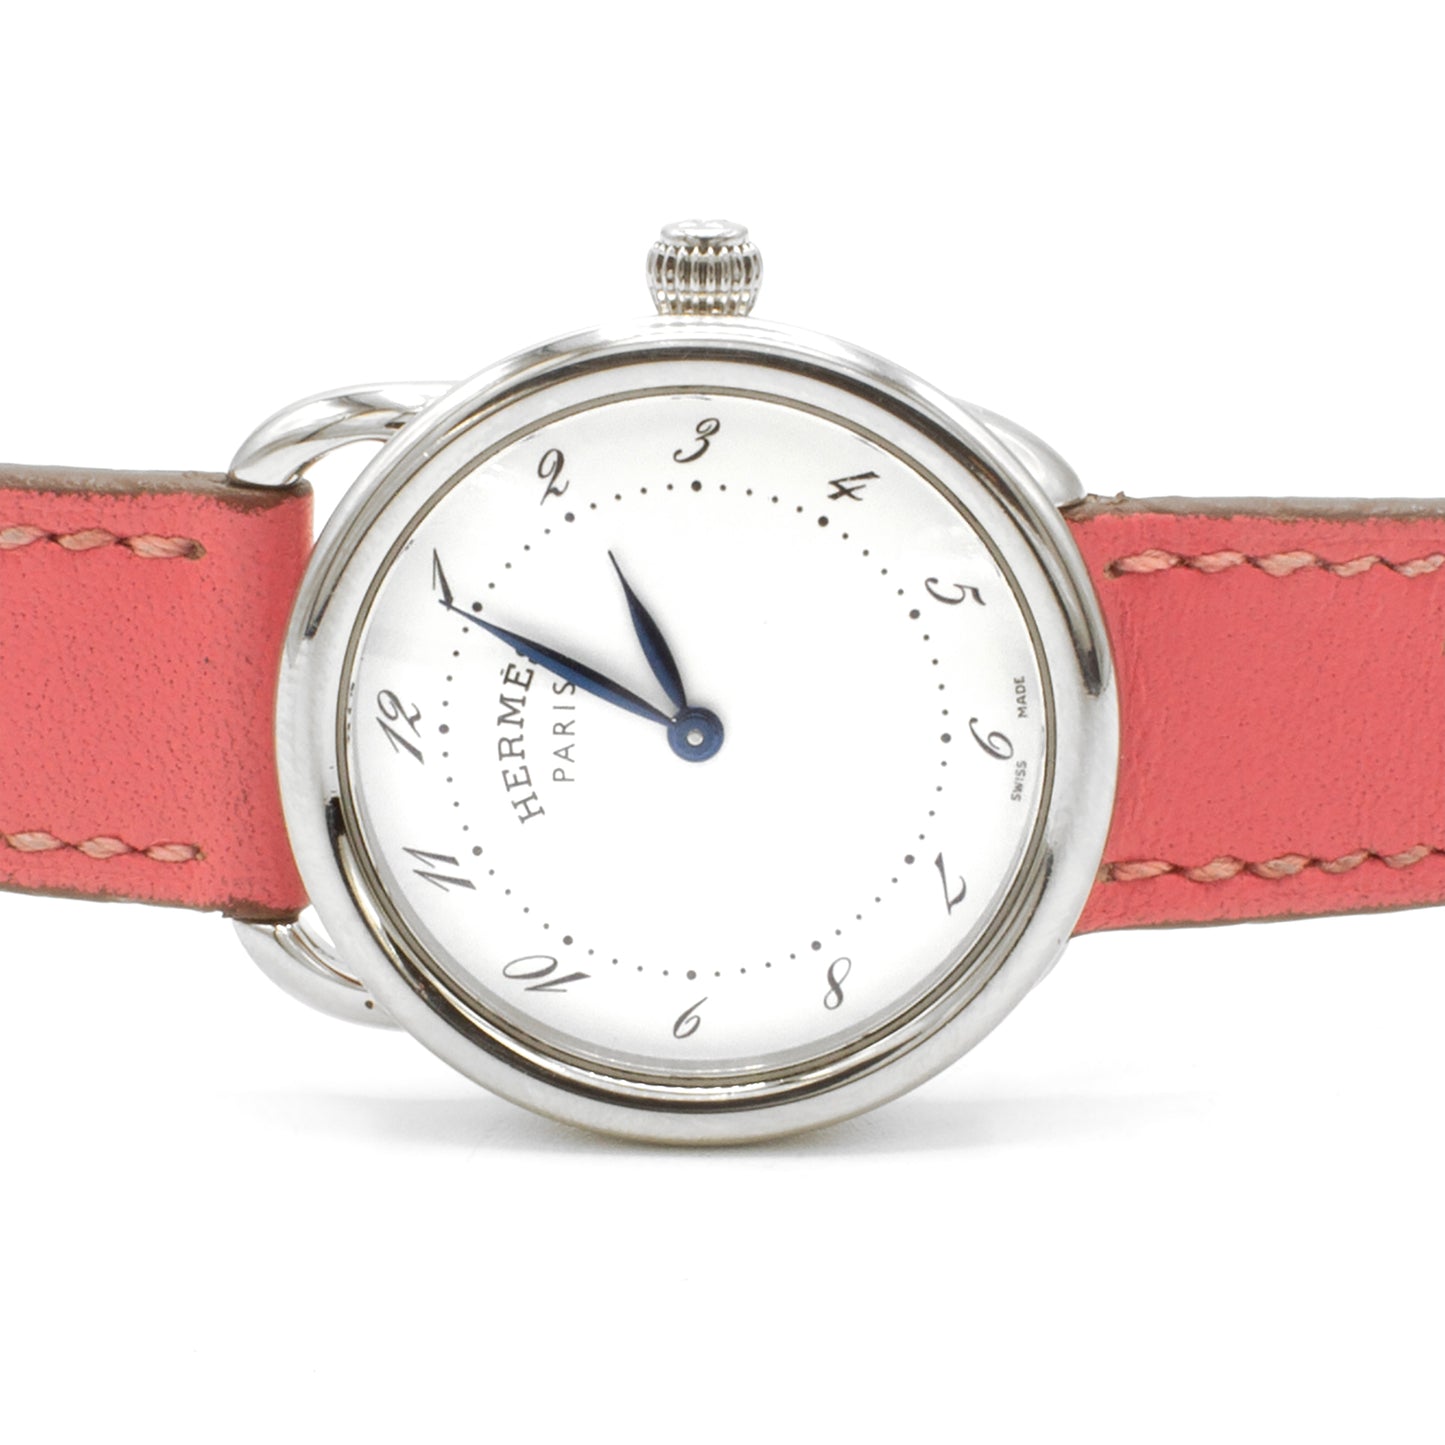 Hermès Arceau AR5.210a watch